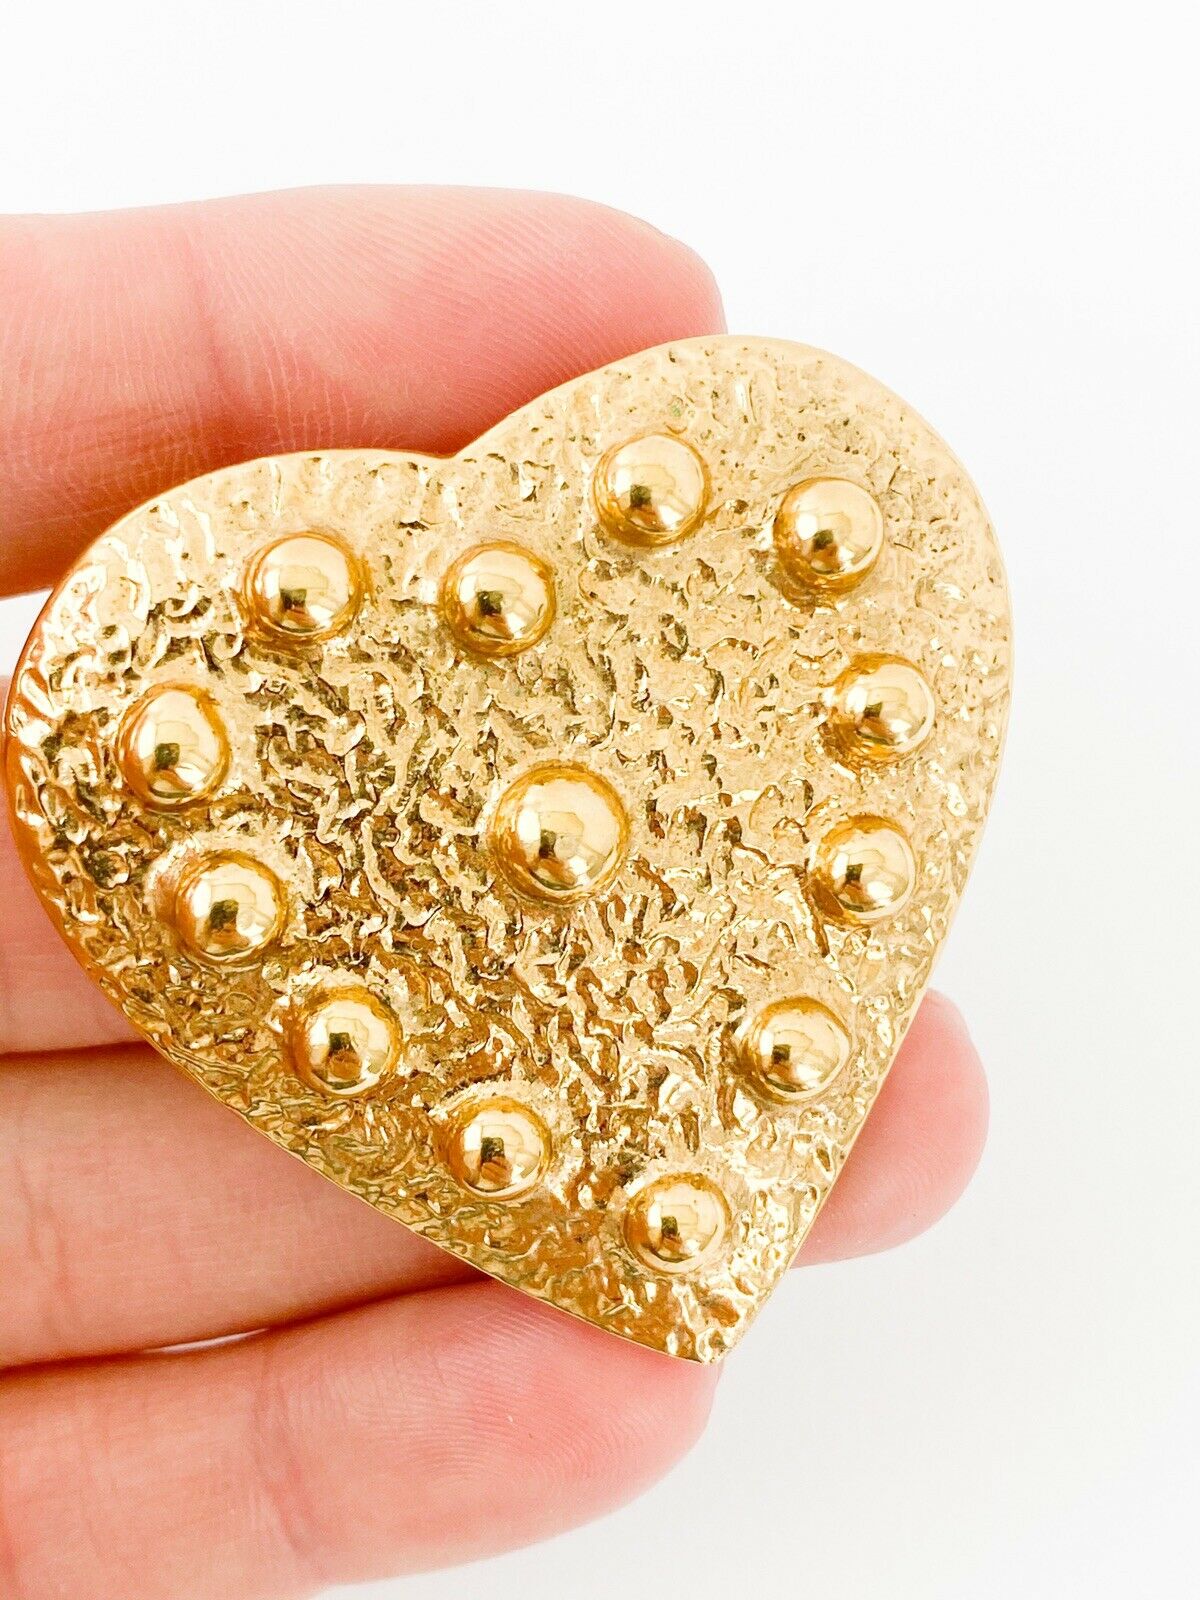 YSL Yves Saint Laurent Vintage Gold Tone Heart Pendant Brooch Pin